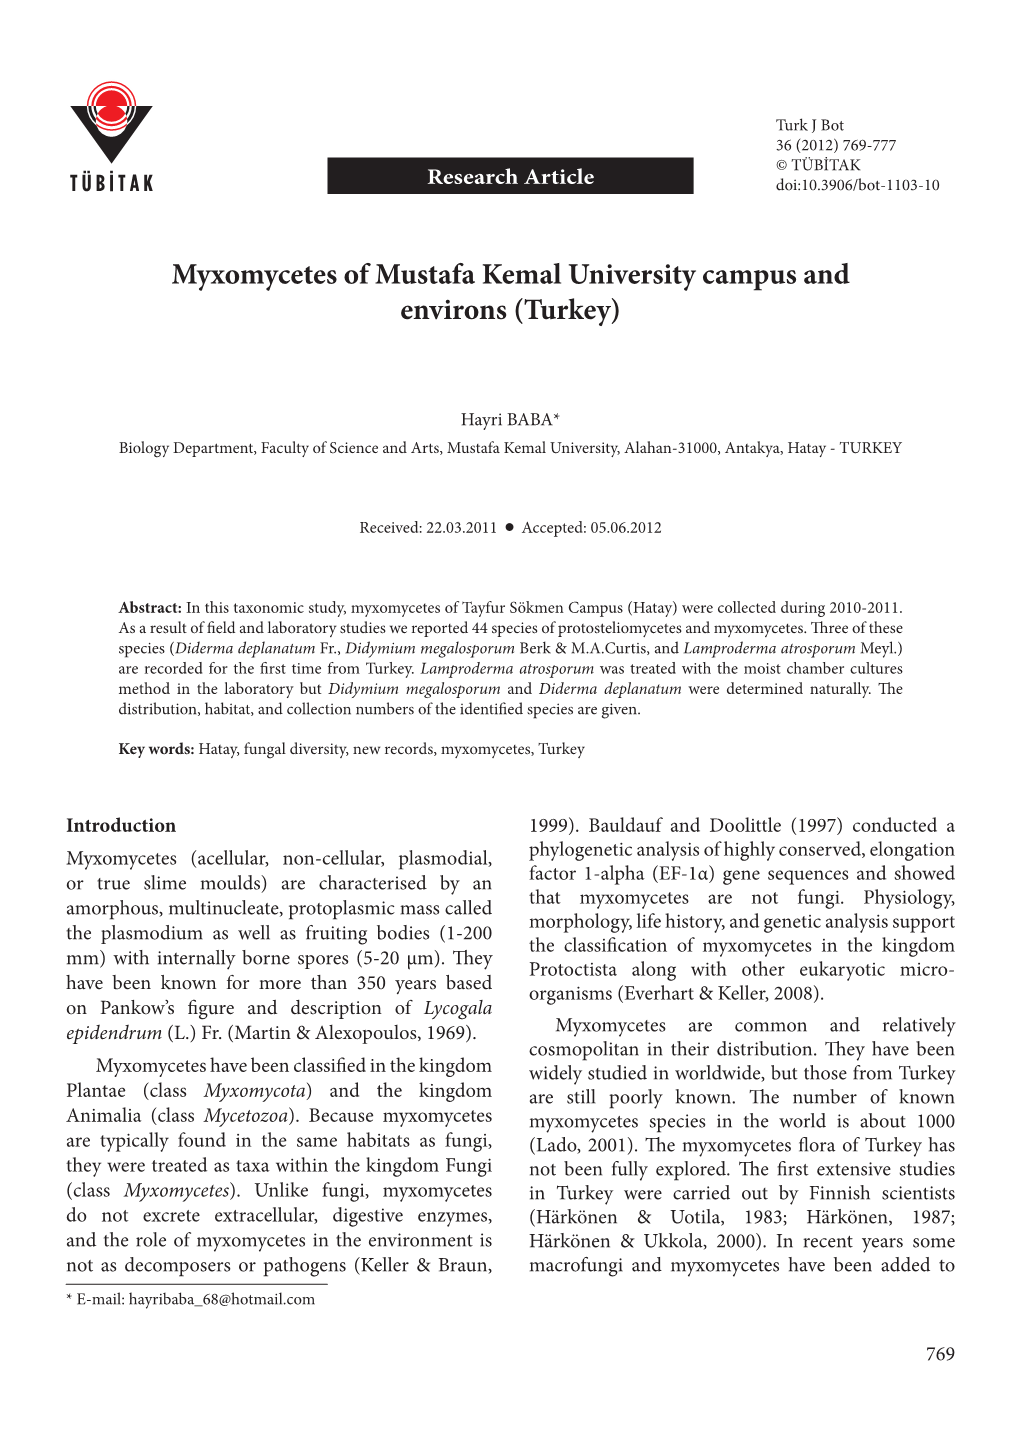 Myxomycetes of Mustafa Kemal University Campus and Environs (Turkey)